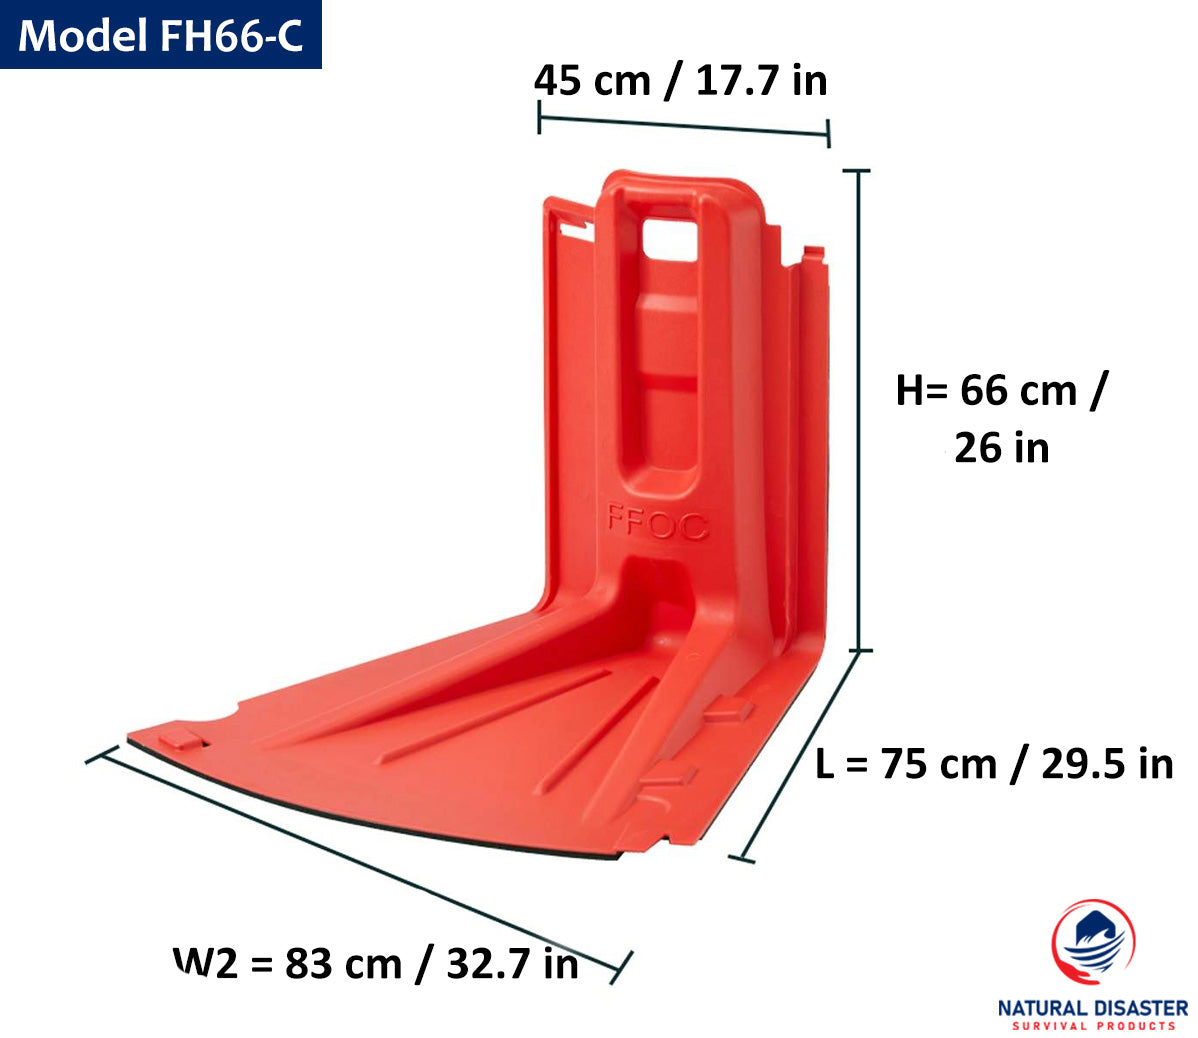 Flood Barriers Model FH66-C